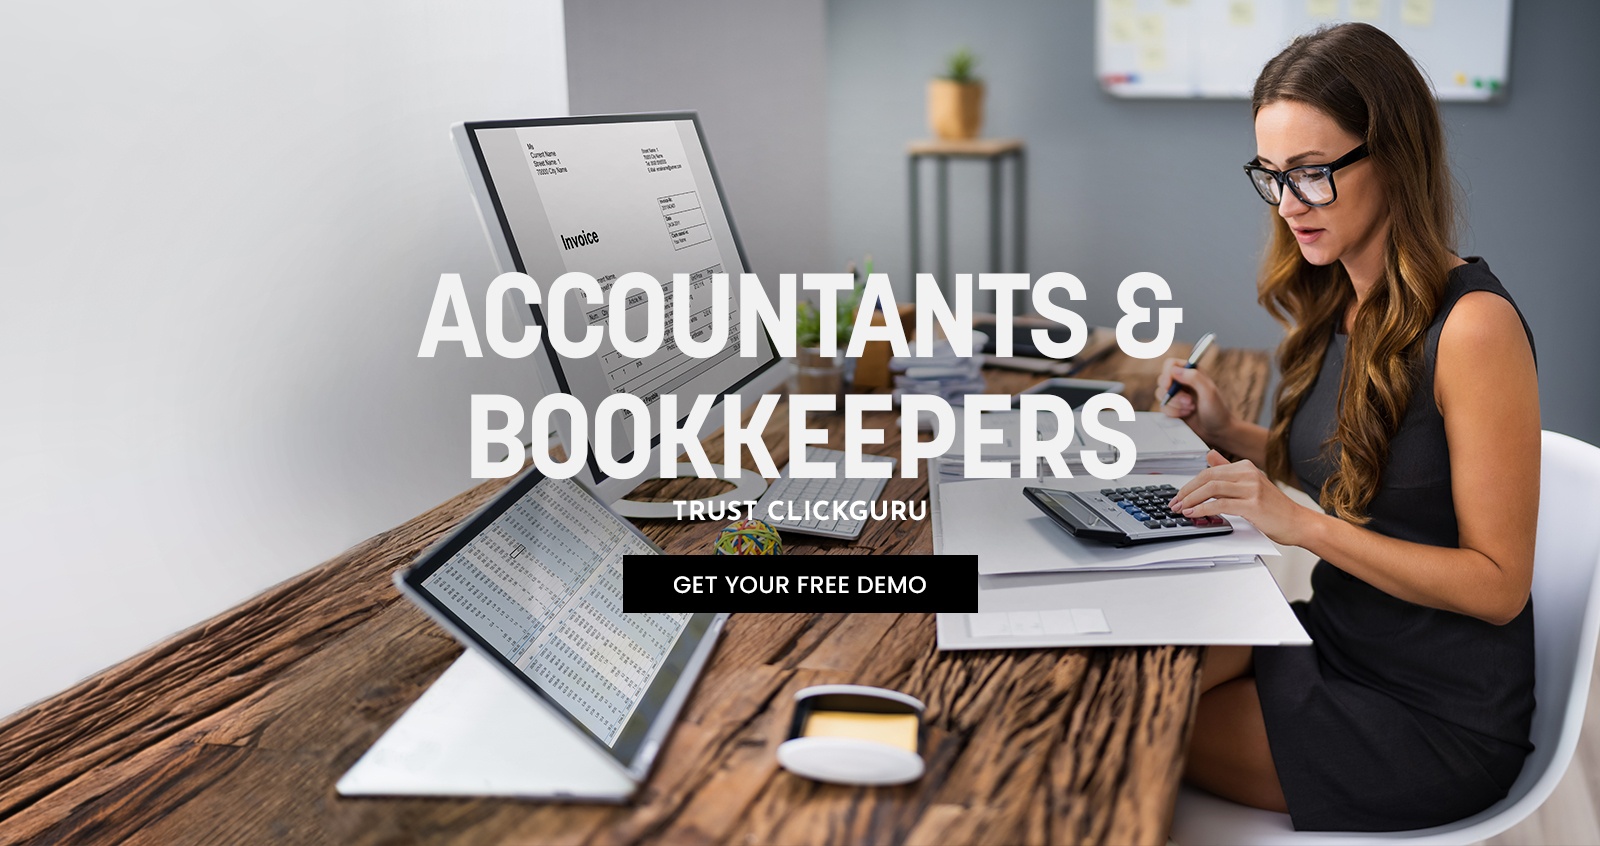 Clickguru Accountants